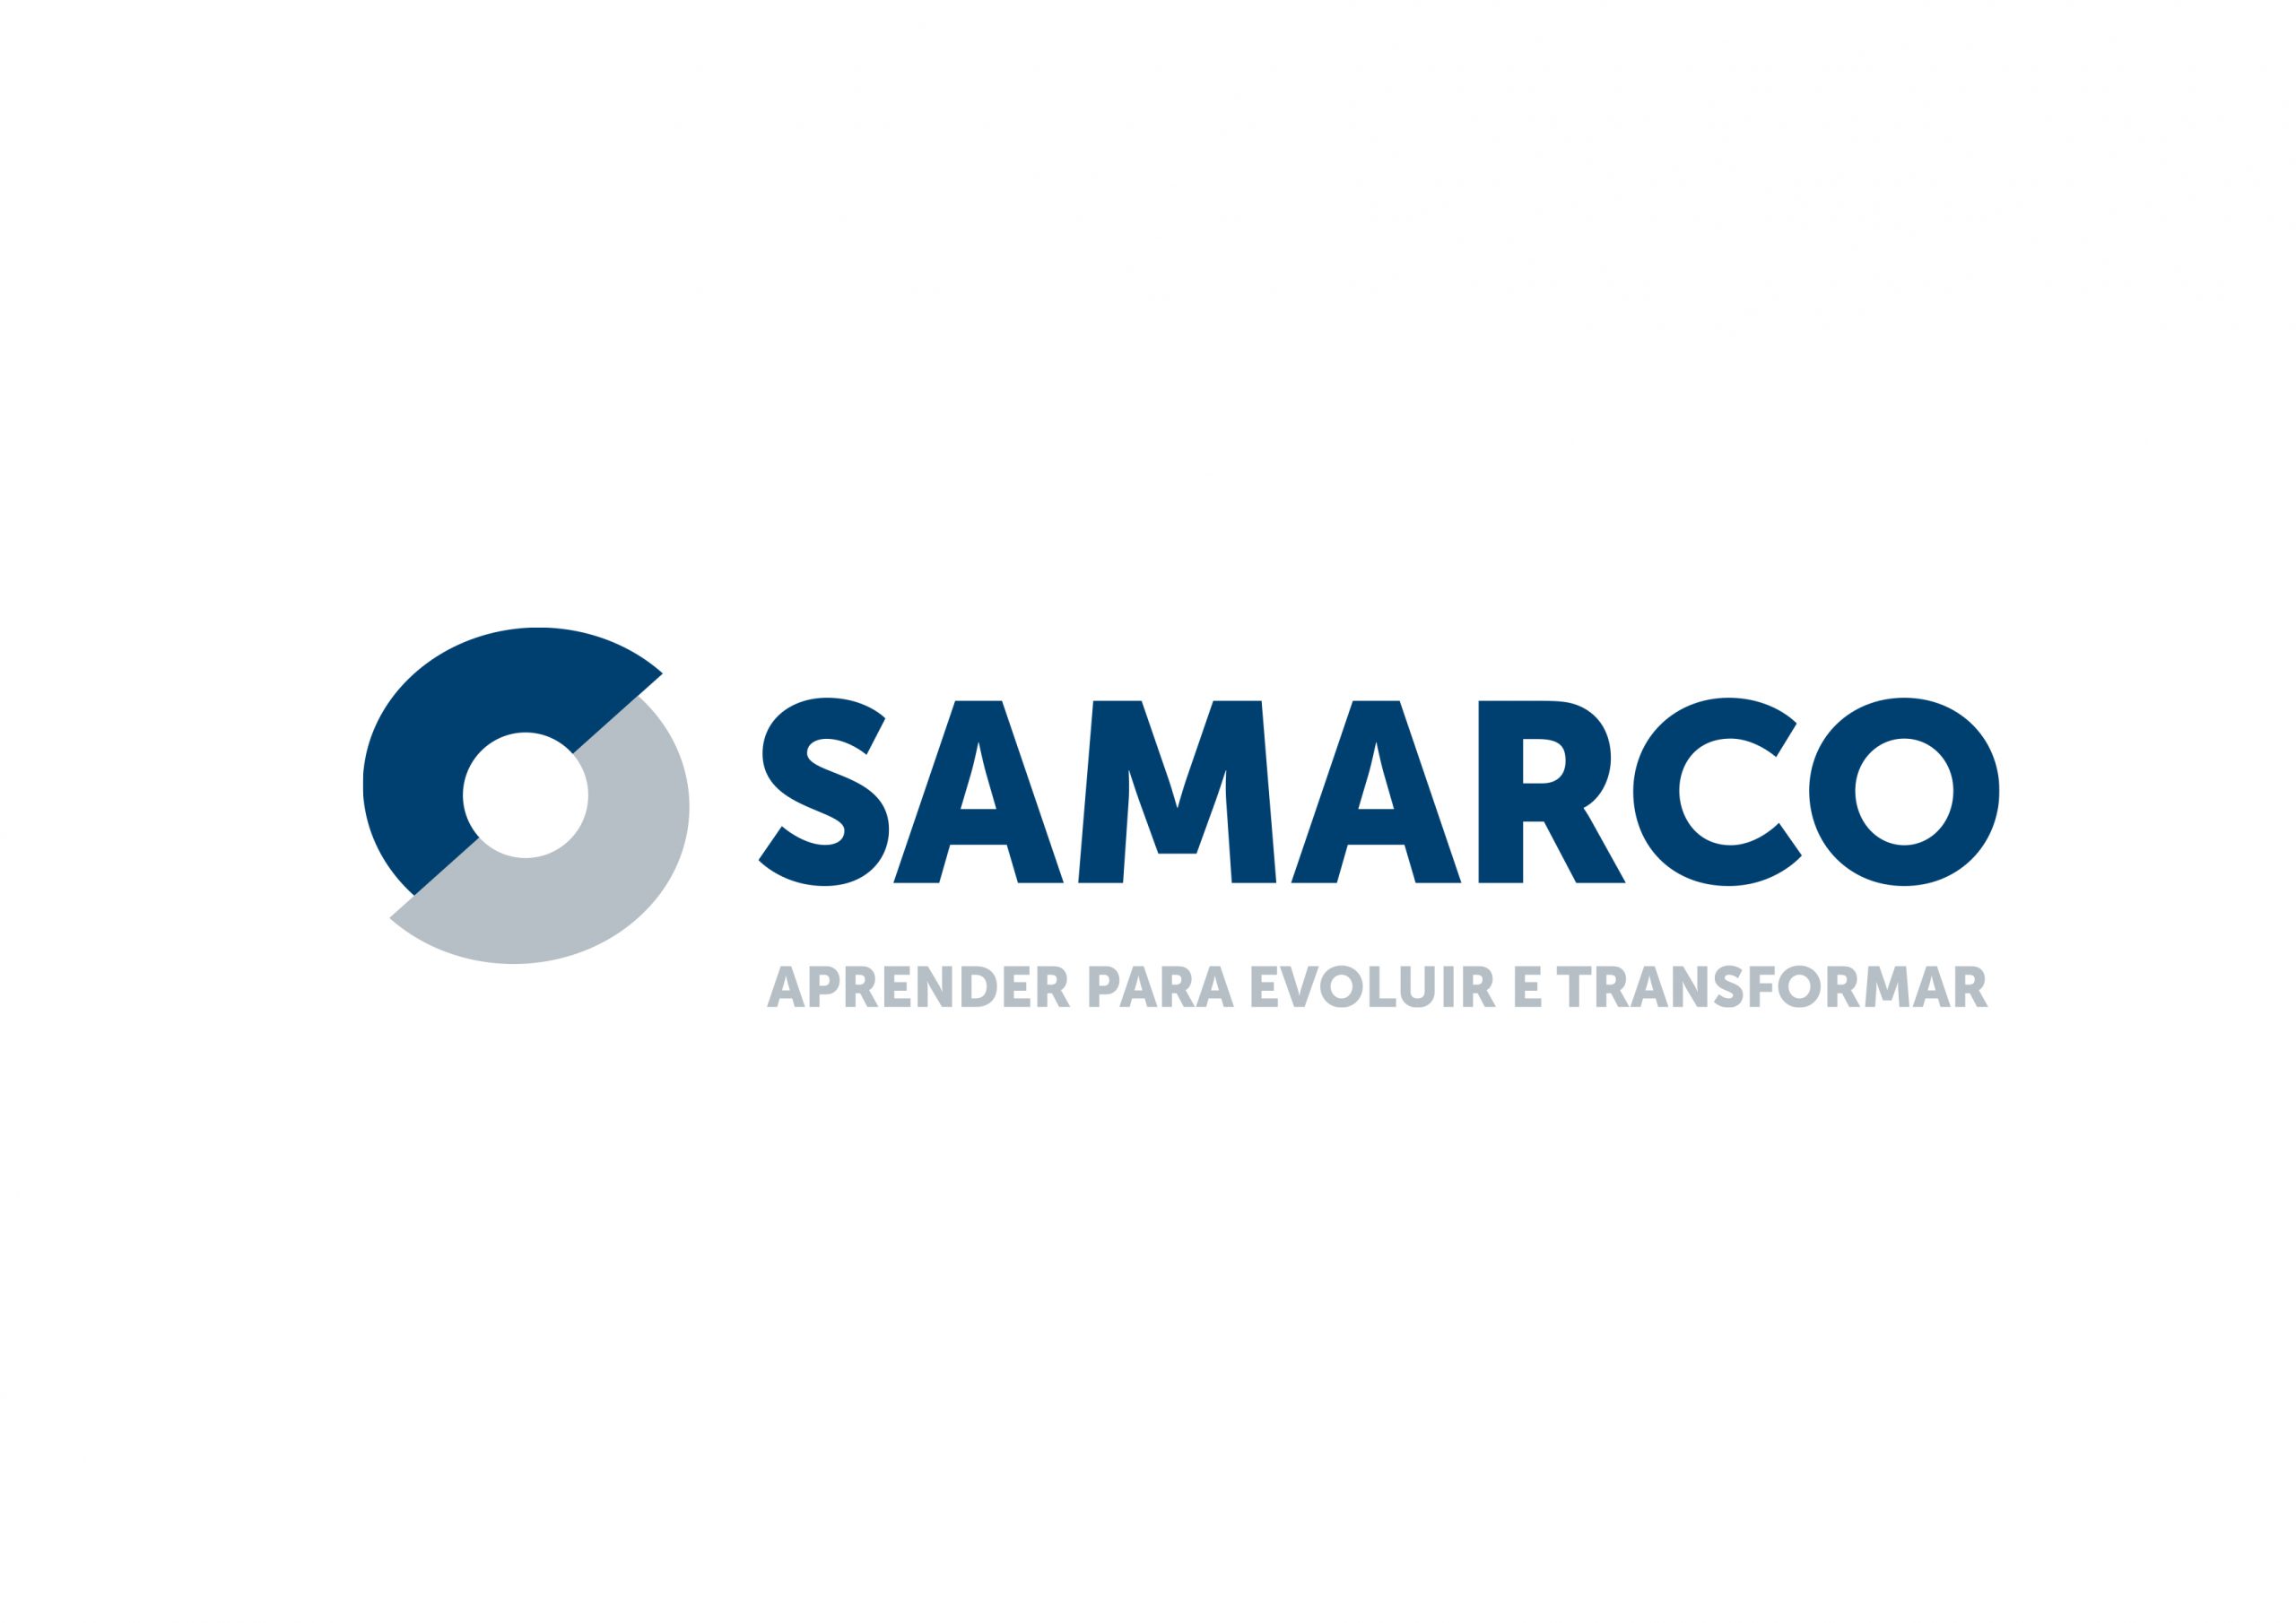 Samarco realiza feiras de artesanato e gastronomia com expositores de comunidades locais de Minas Gerais e do Espírito Santo